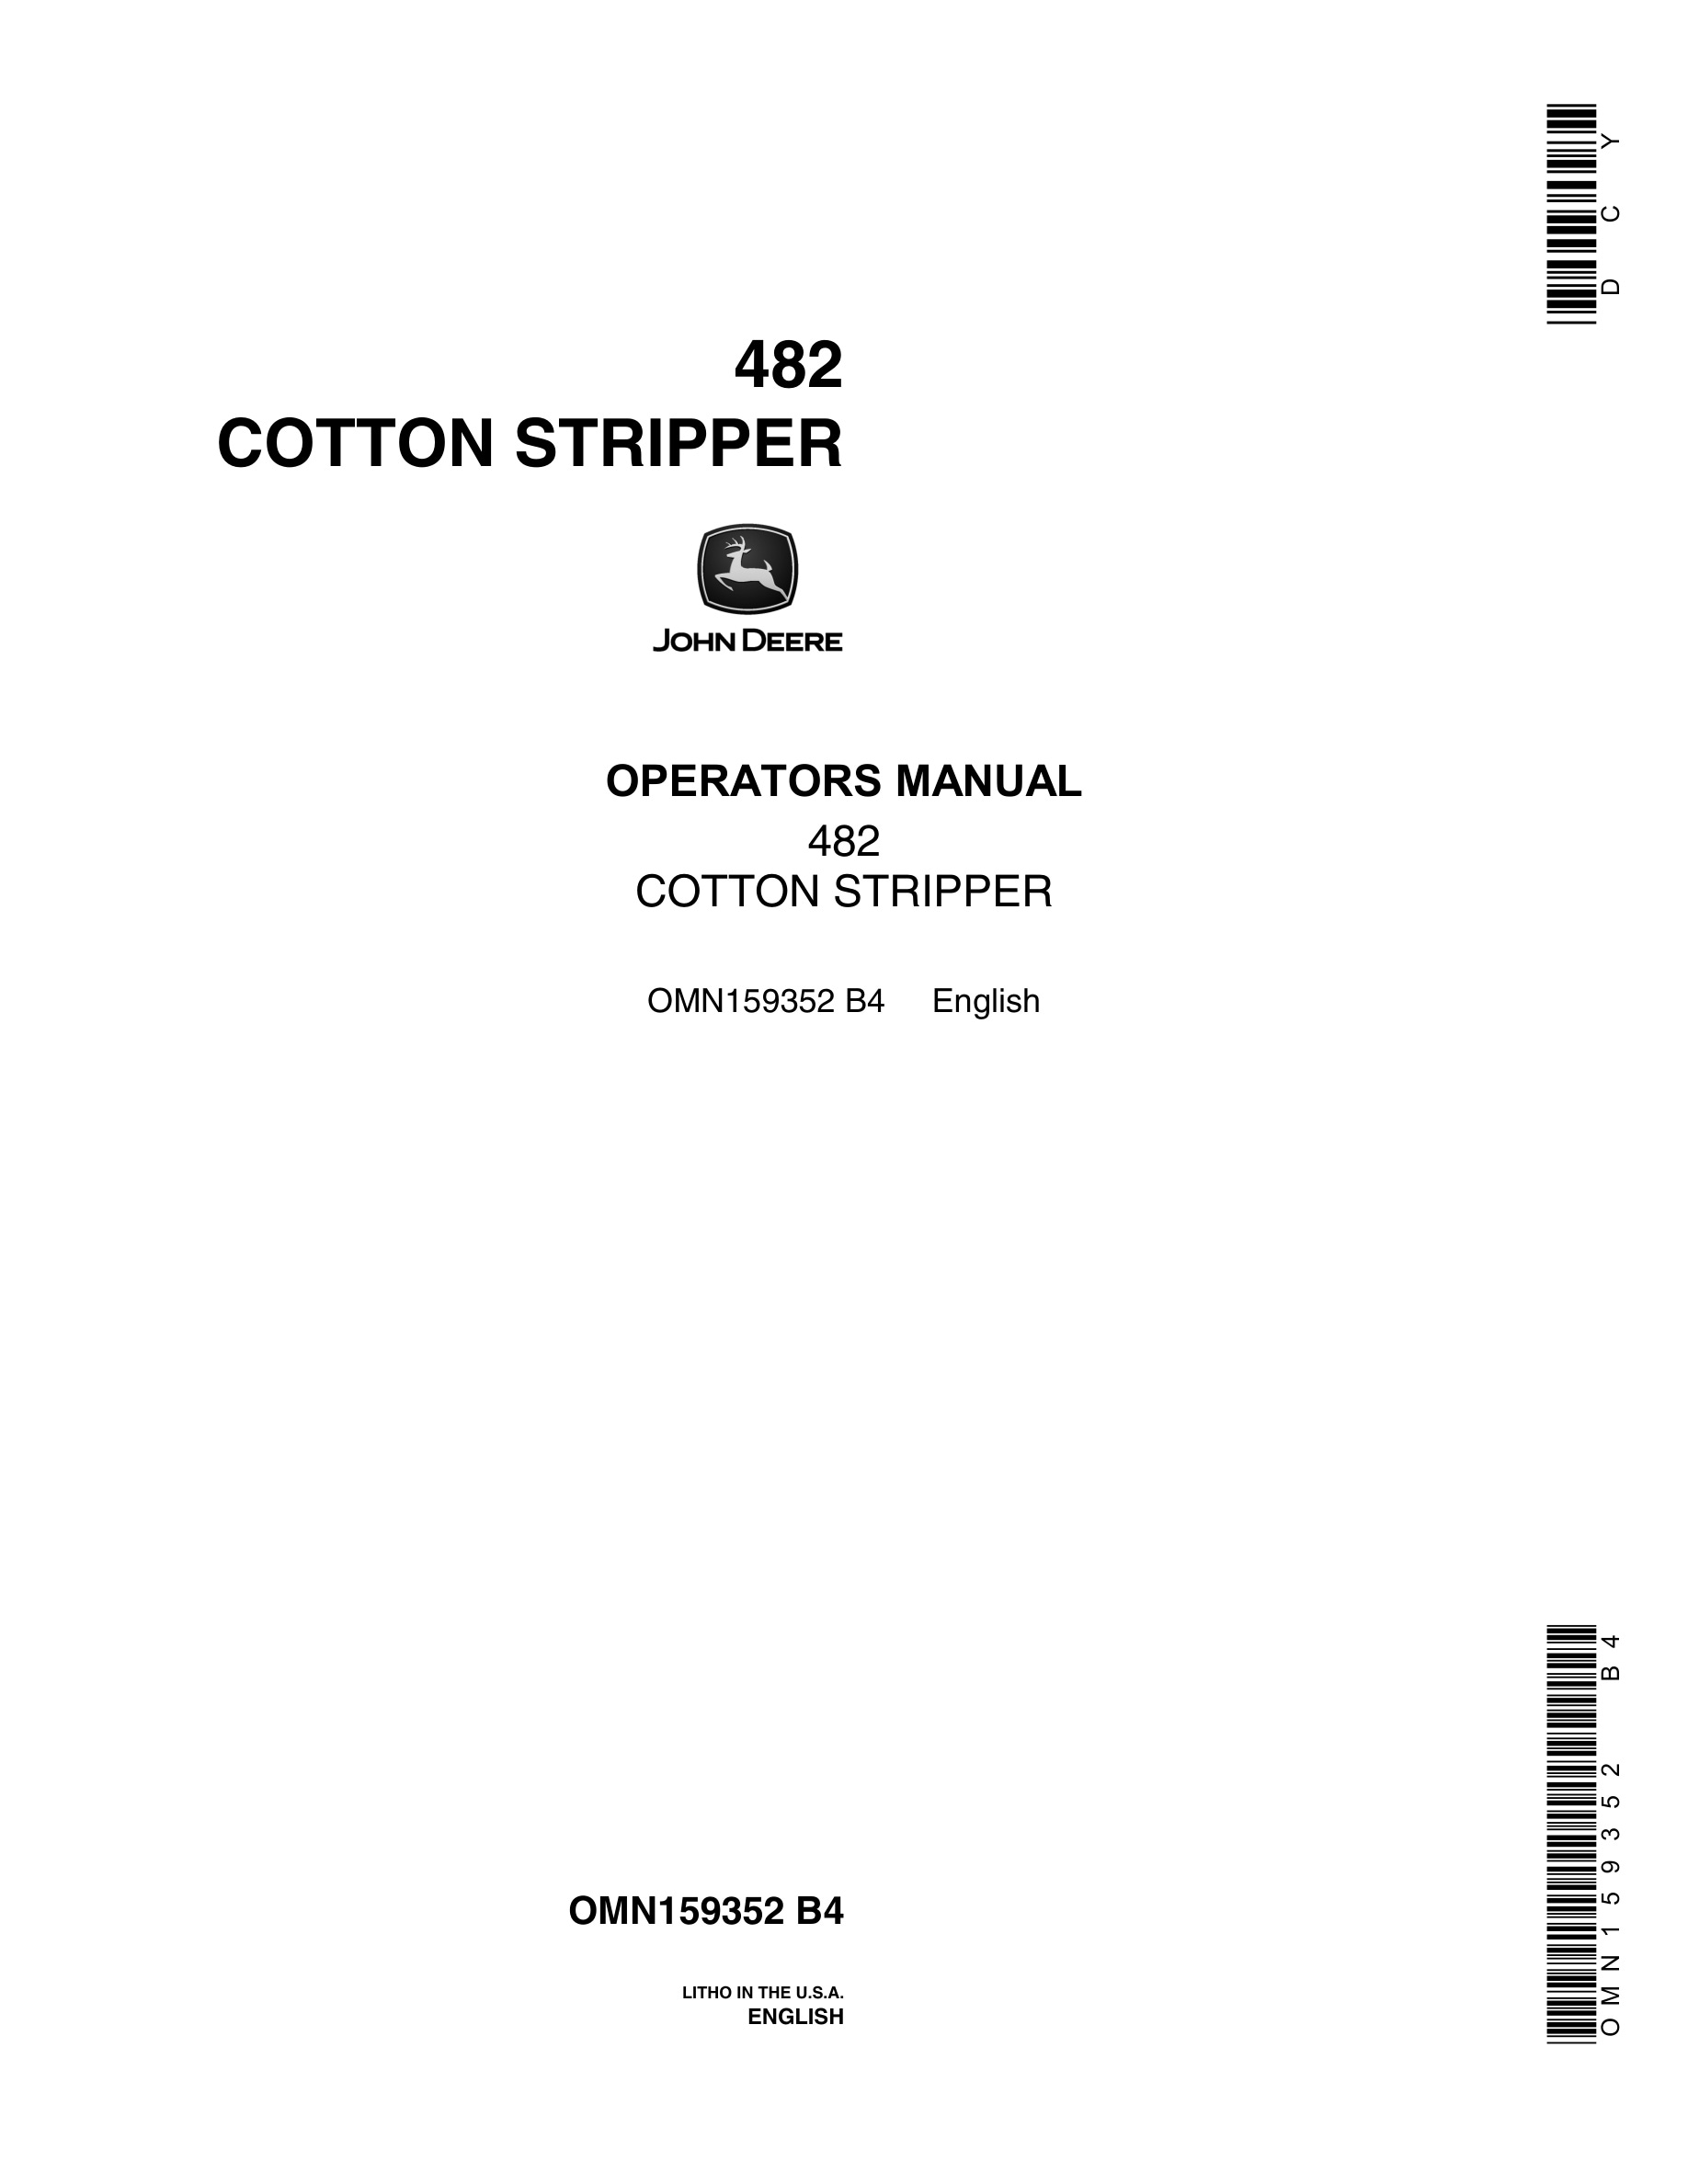 John Deere 482 Cotton Sripper Operator Manual OMN159352-1